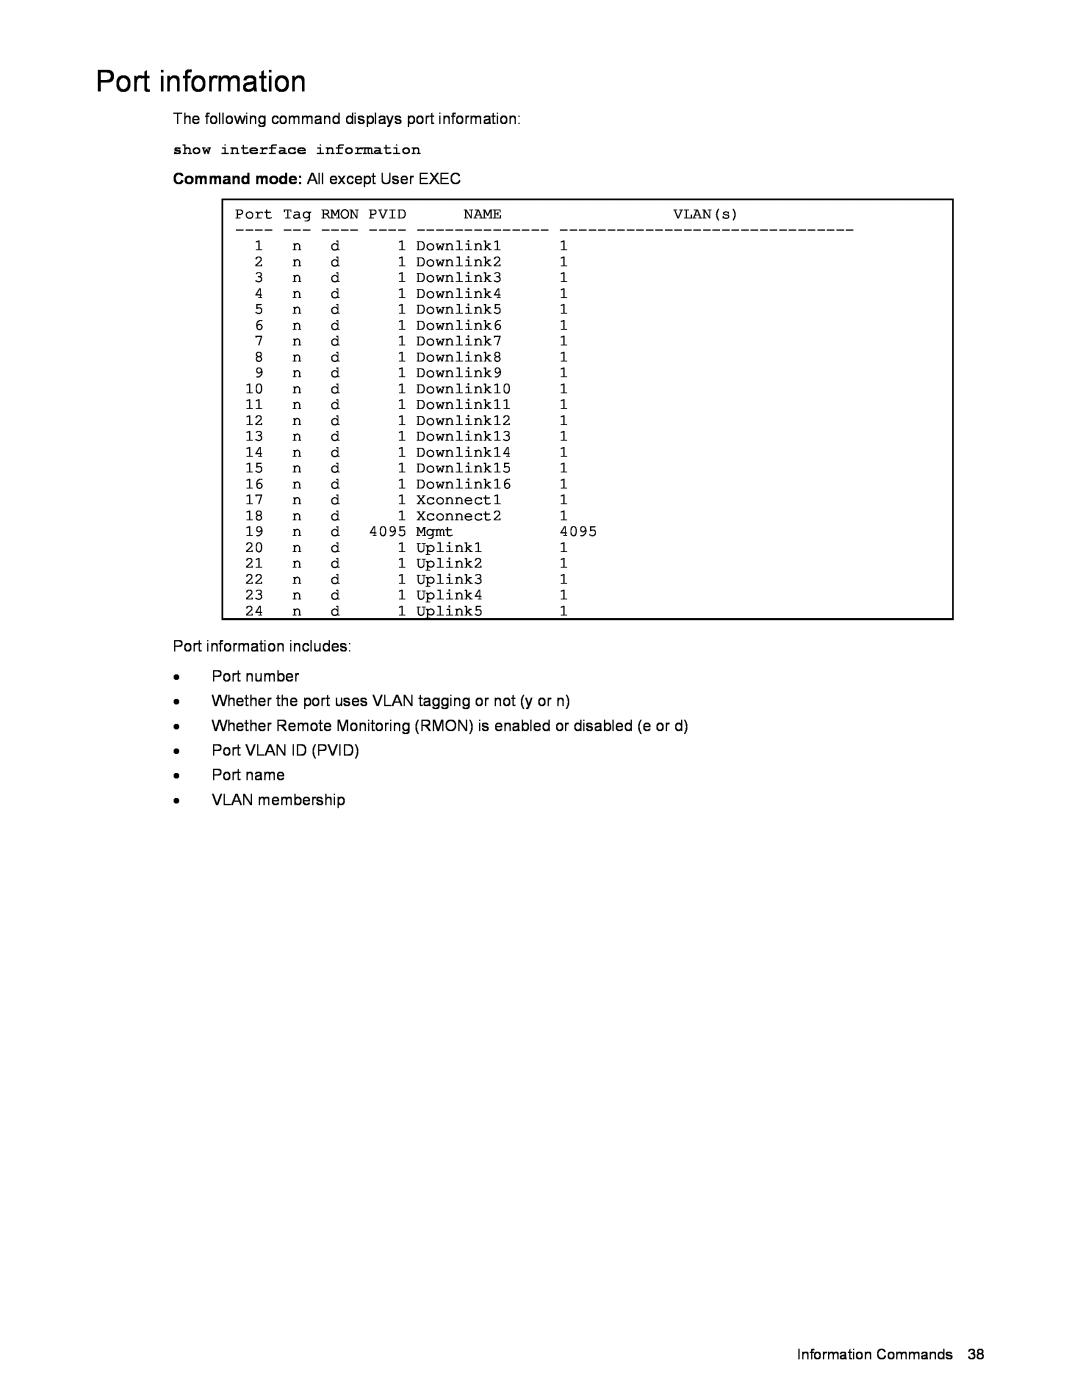 NEC N8406-022 manual Port information 